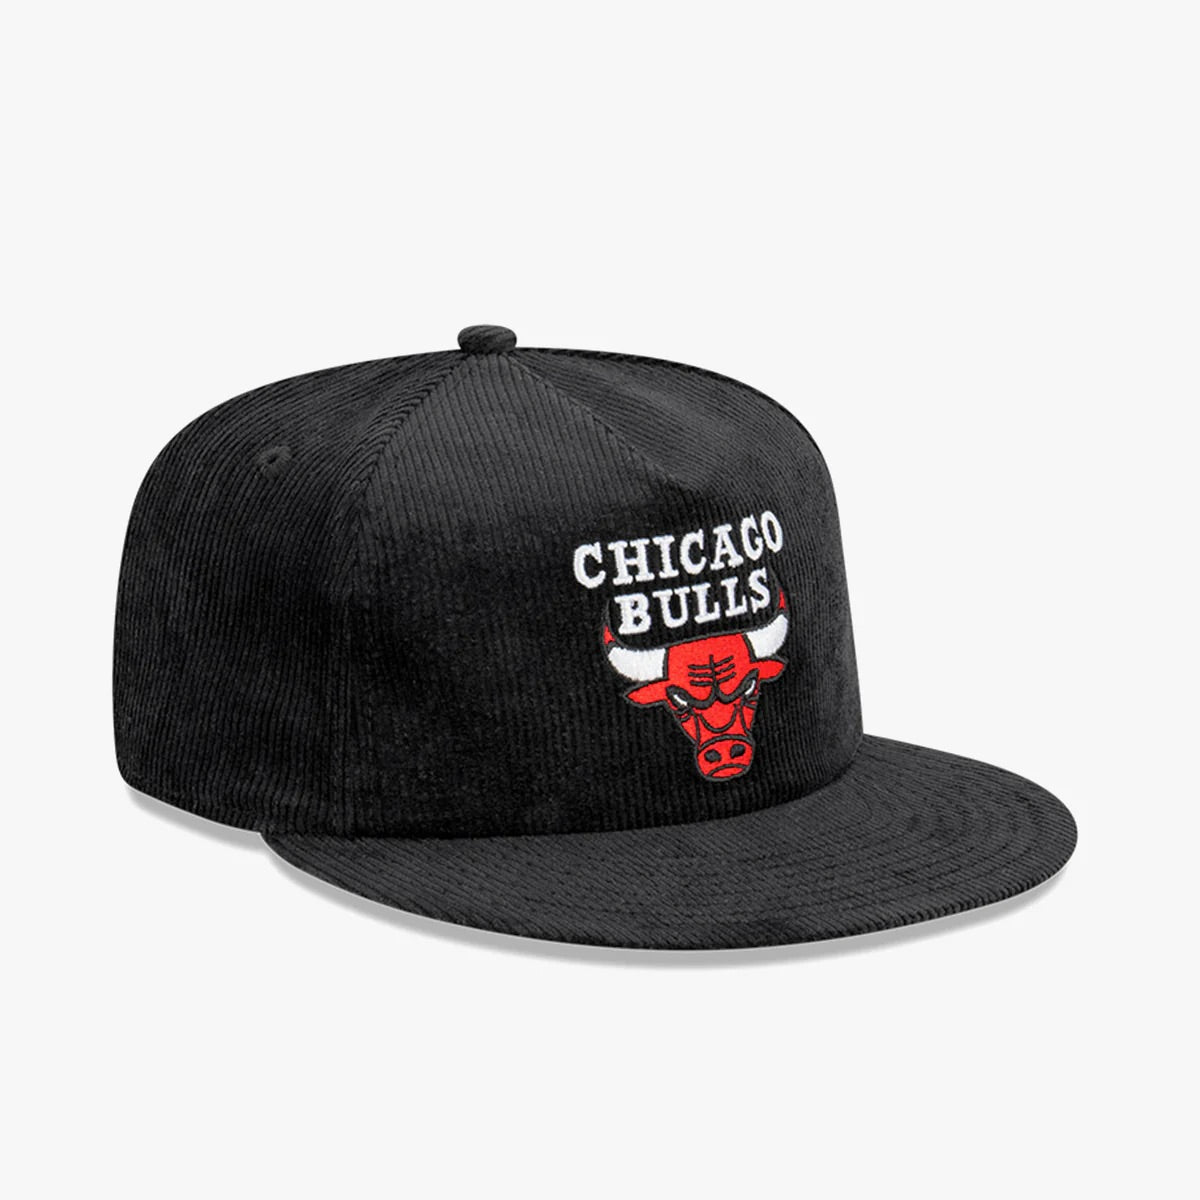 Chicago Bulls Hat - The Golfer Black Corduroy NBA Snapback Cap - New Era